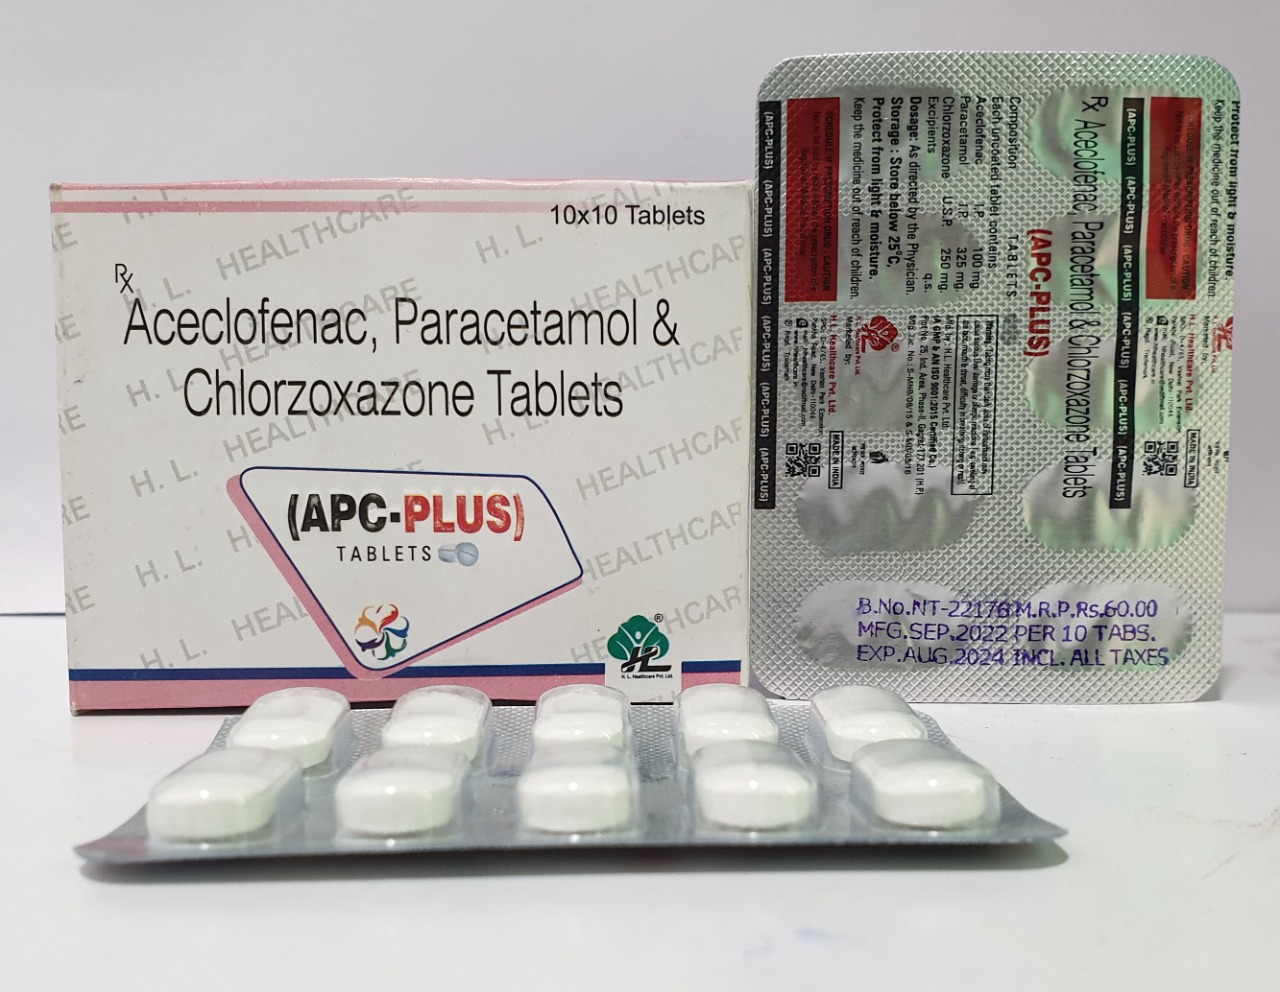 aceclofenec 100mg + paracetamol 325mg +
chlorzoxazone 250mg